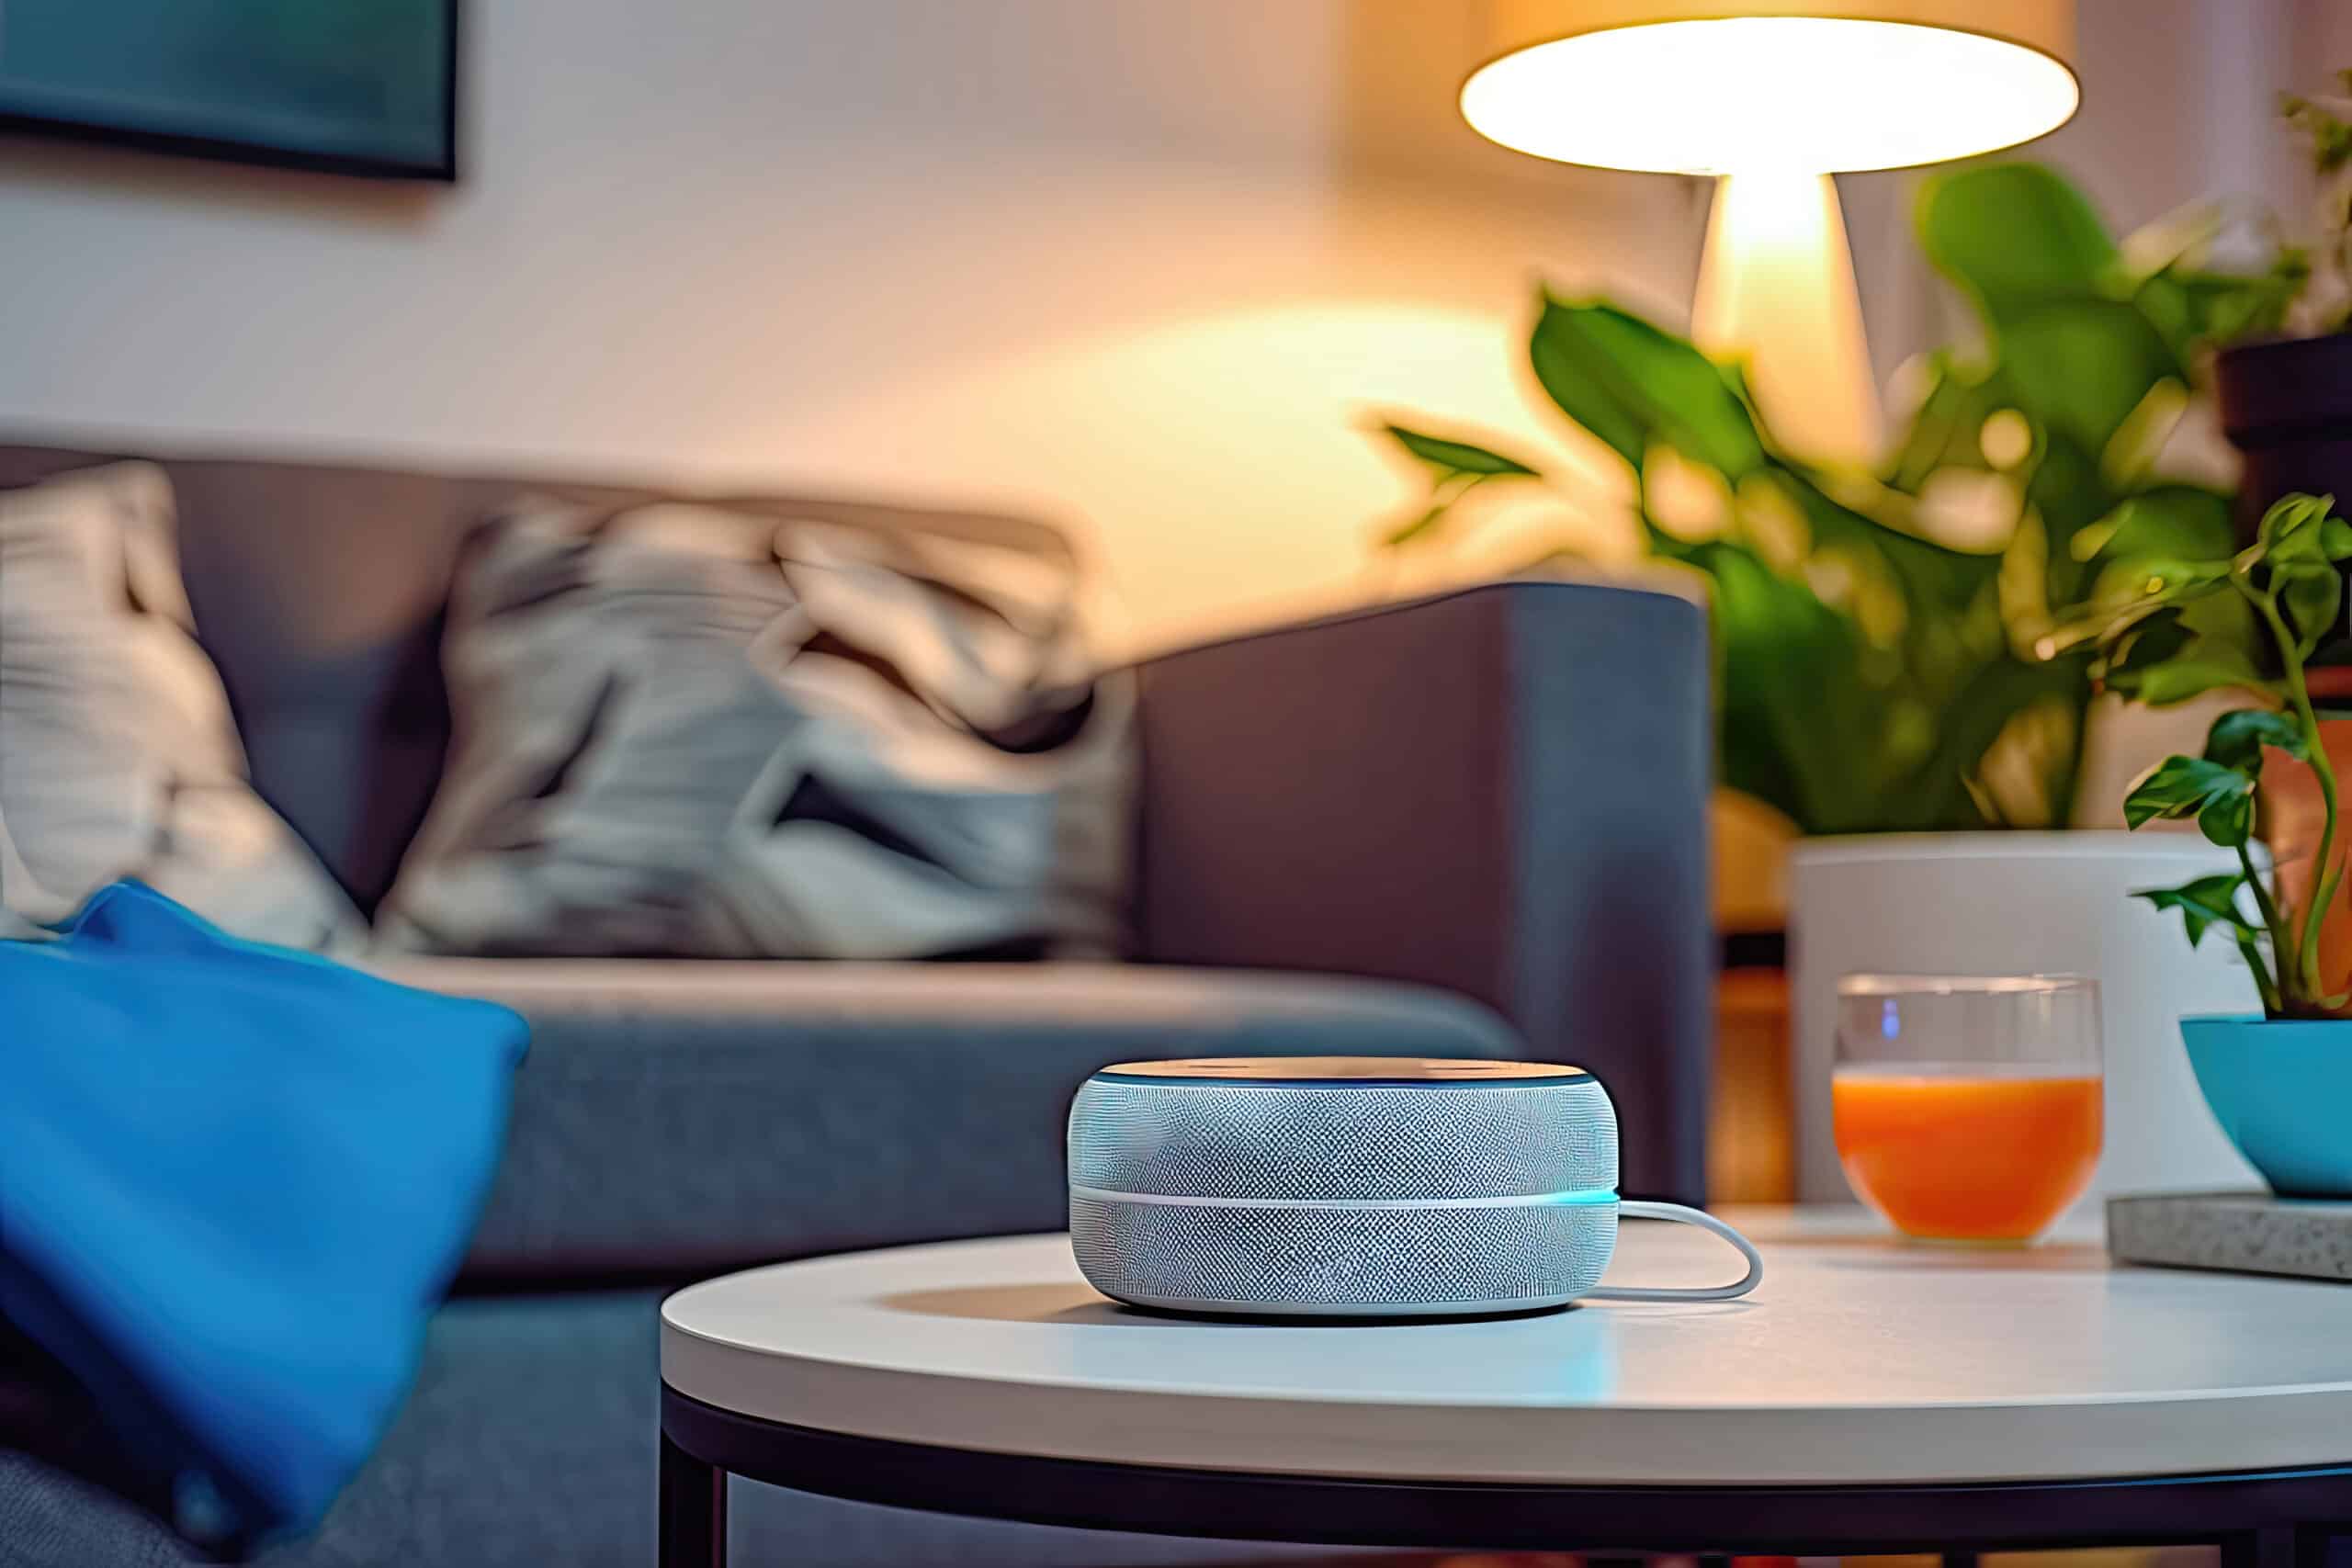 www.appr.com : Can Alexa Control My Smart Home?